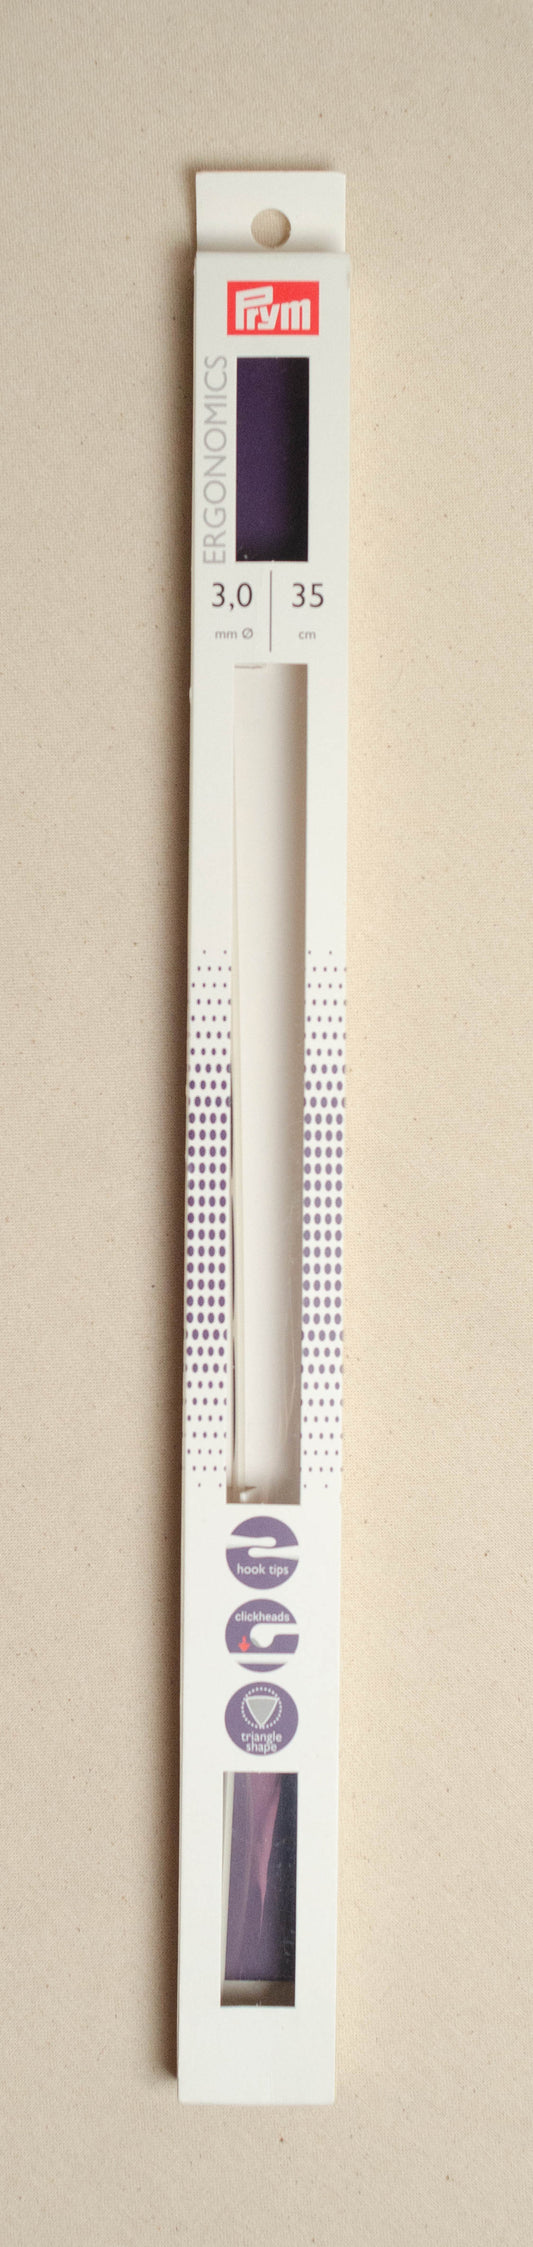 Prym Ergonomics 35cm Knitting Needles - 35cm X 3.0mm